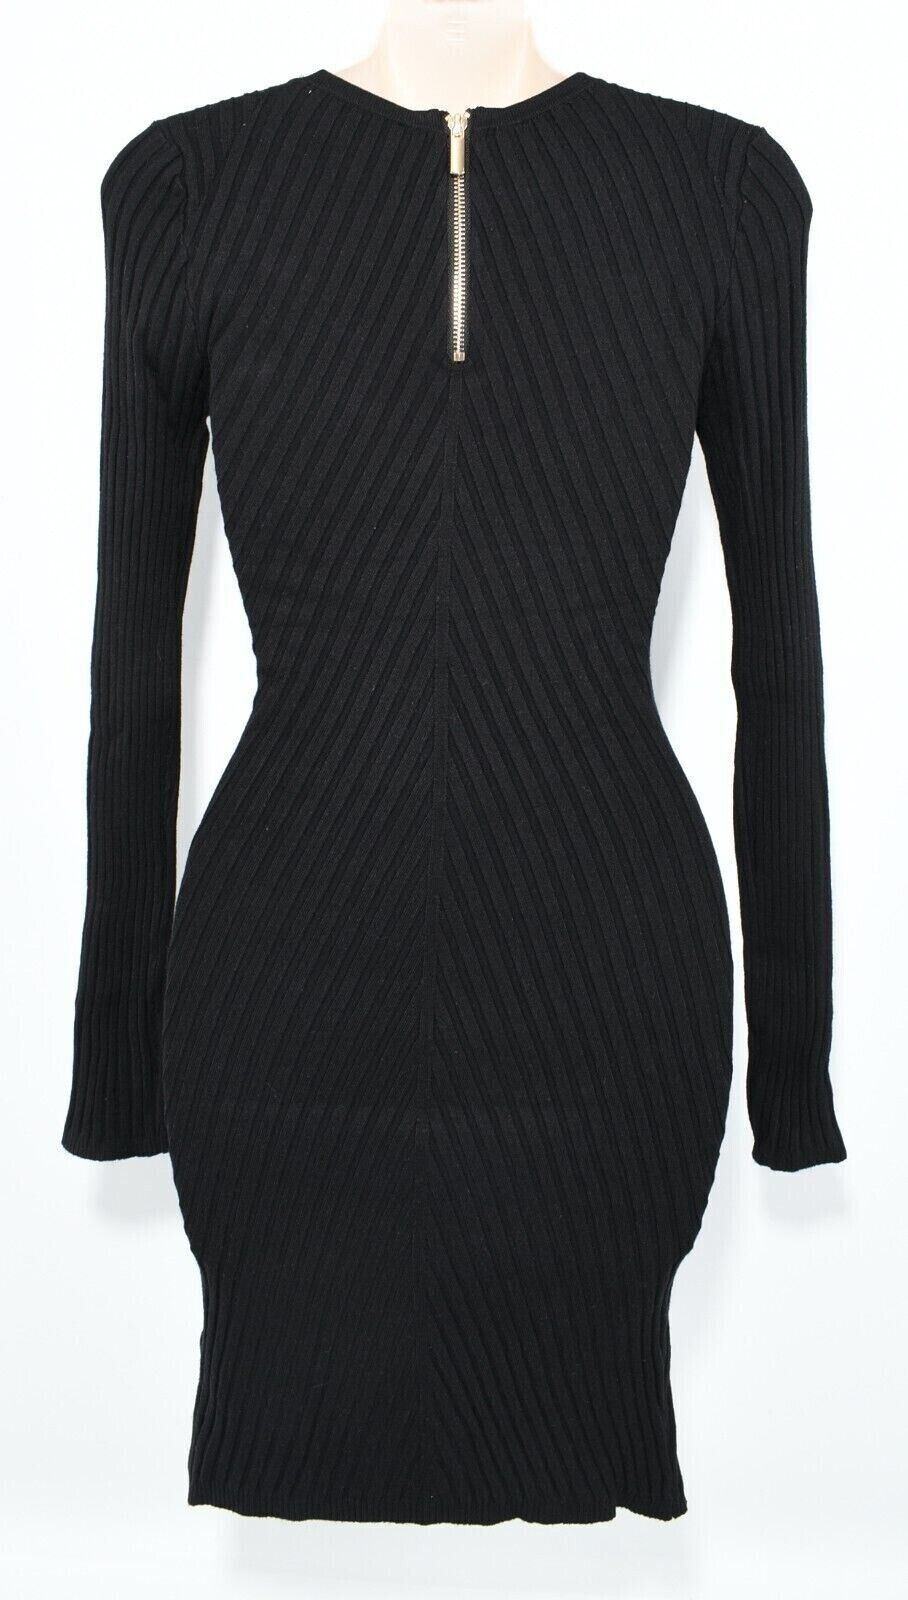 KANGOL Womens Stretch Rib Knit Fitted Dress, Black, size L /UK 14